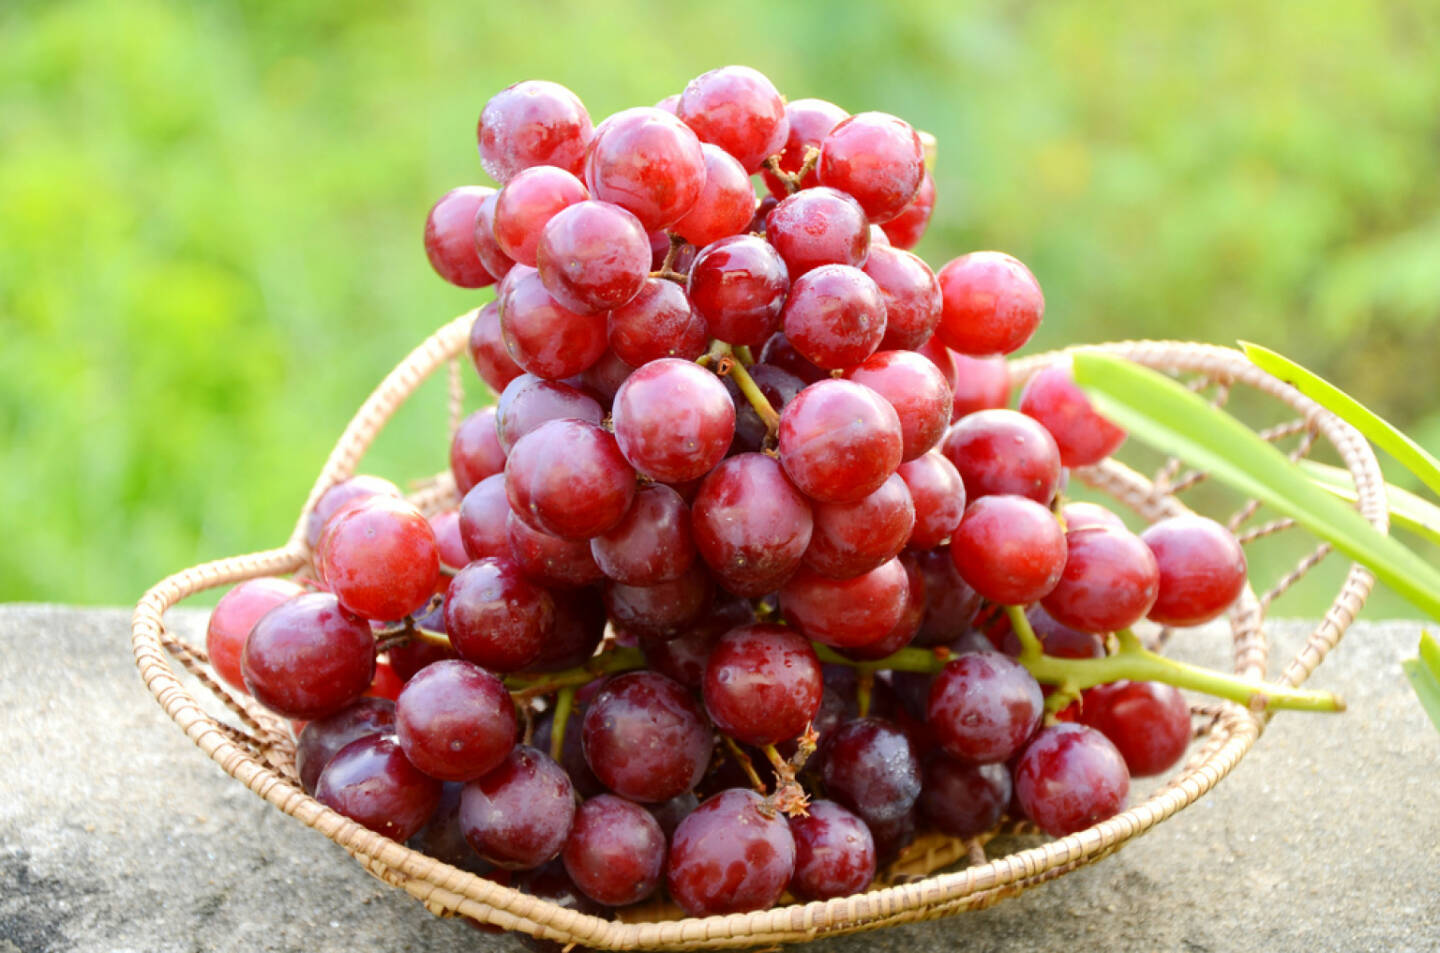 Weintrauben, rote Weintrauben, Superfruits, http://www.shutterstock.com/de/pic-112038134/stock-photo-seedless-purple-grape.html